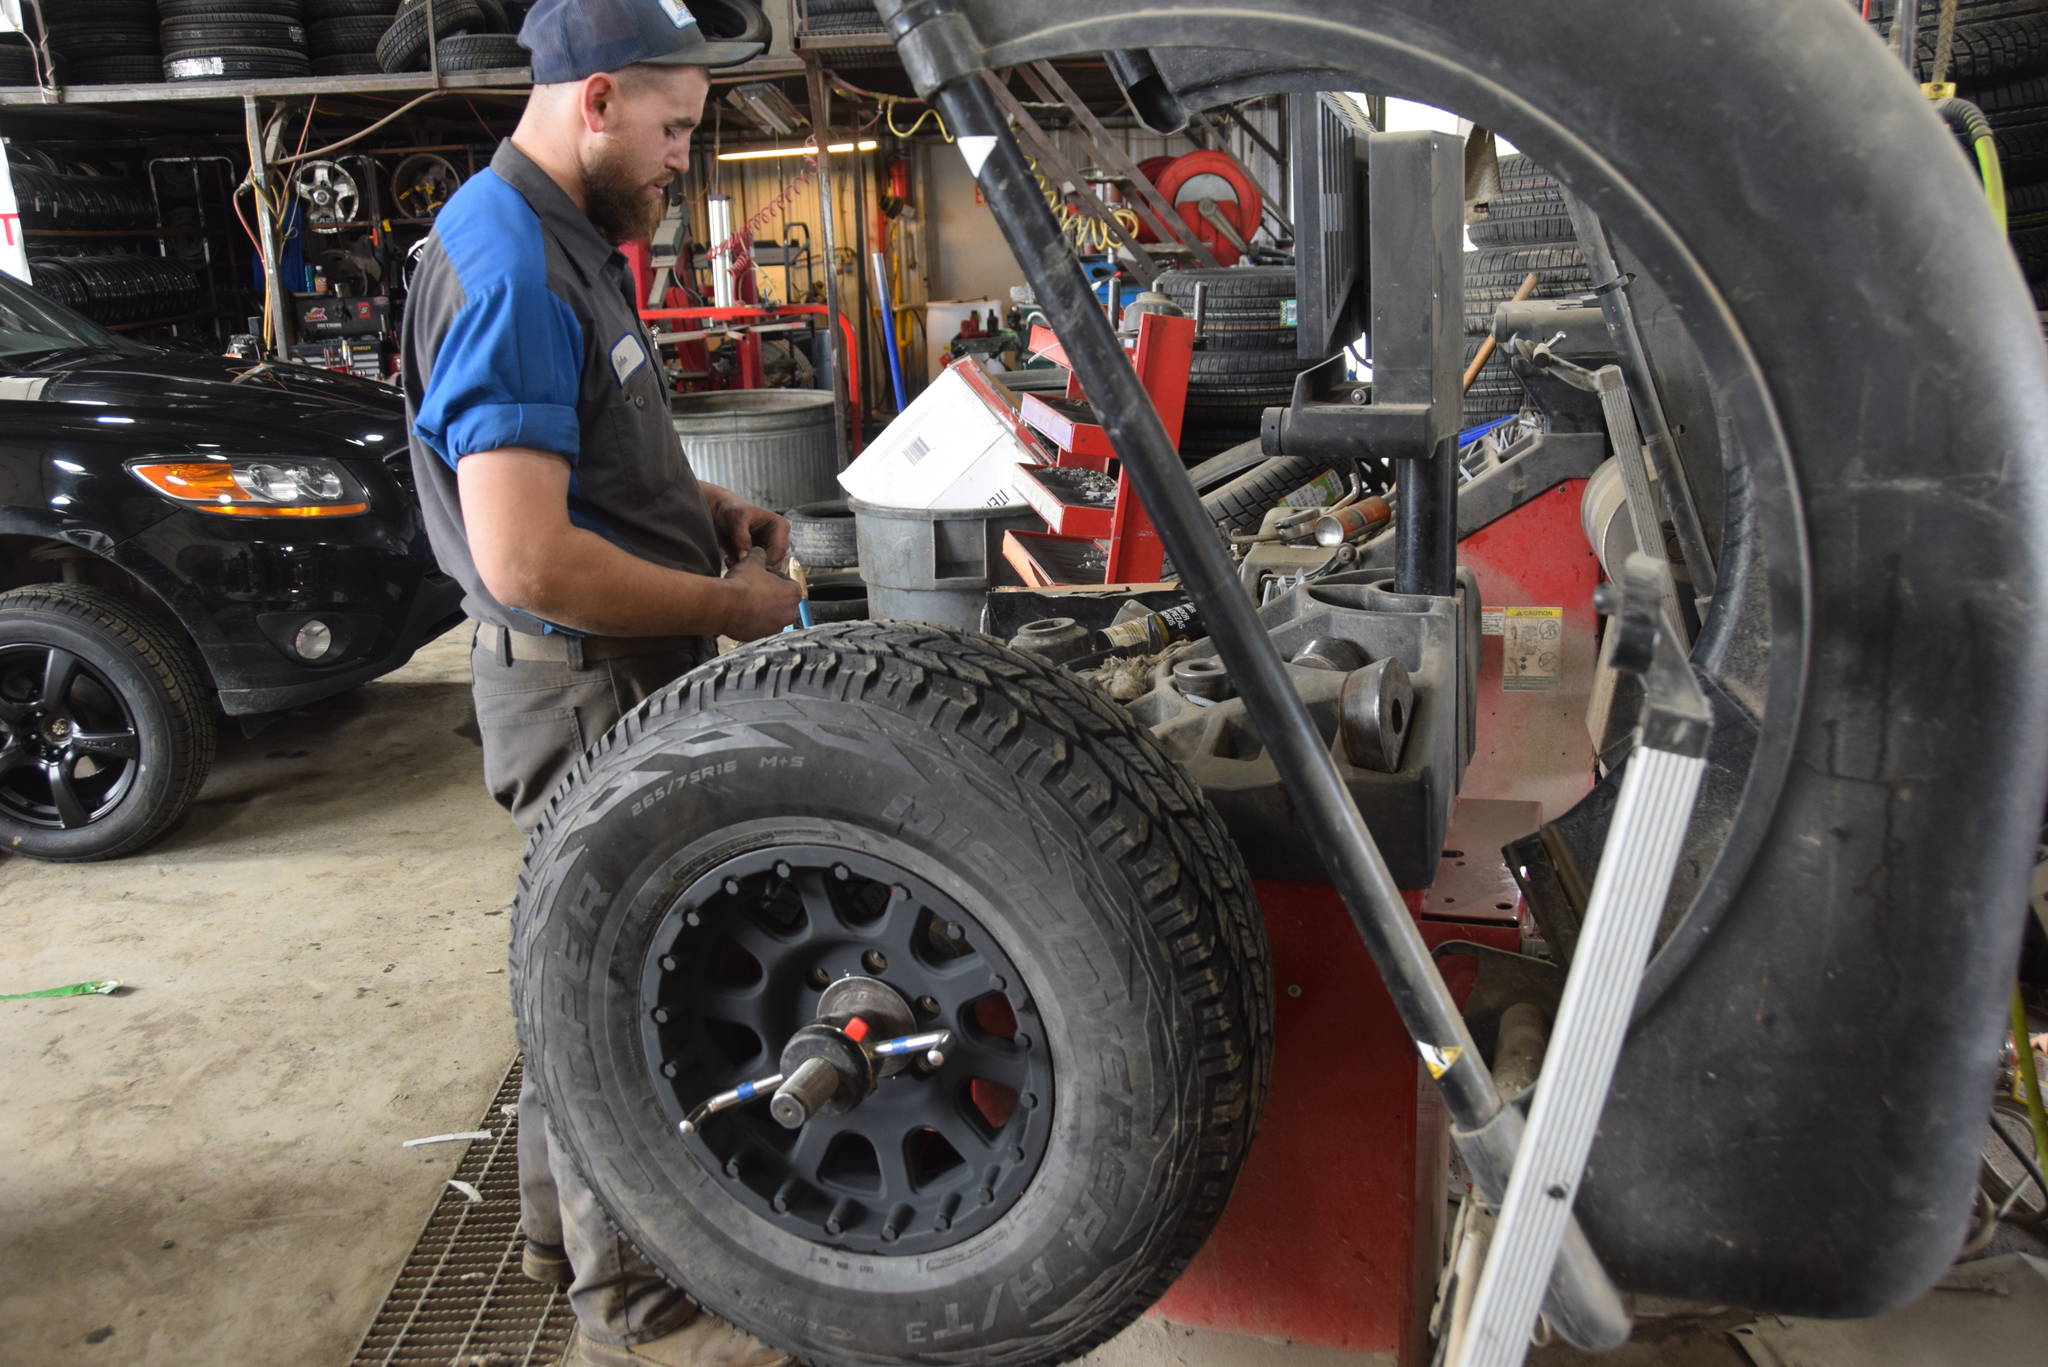 Alyeska Tire employee John Wilson balances a tire at the store in Kenai, Alaska on May 2, 2019. (Photo by Brian Mazurek/Peninsula Clarion)